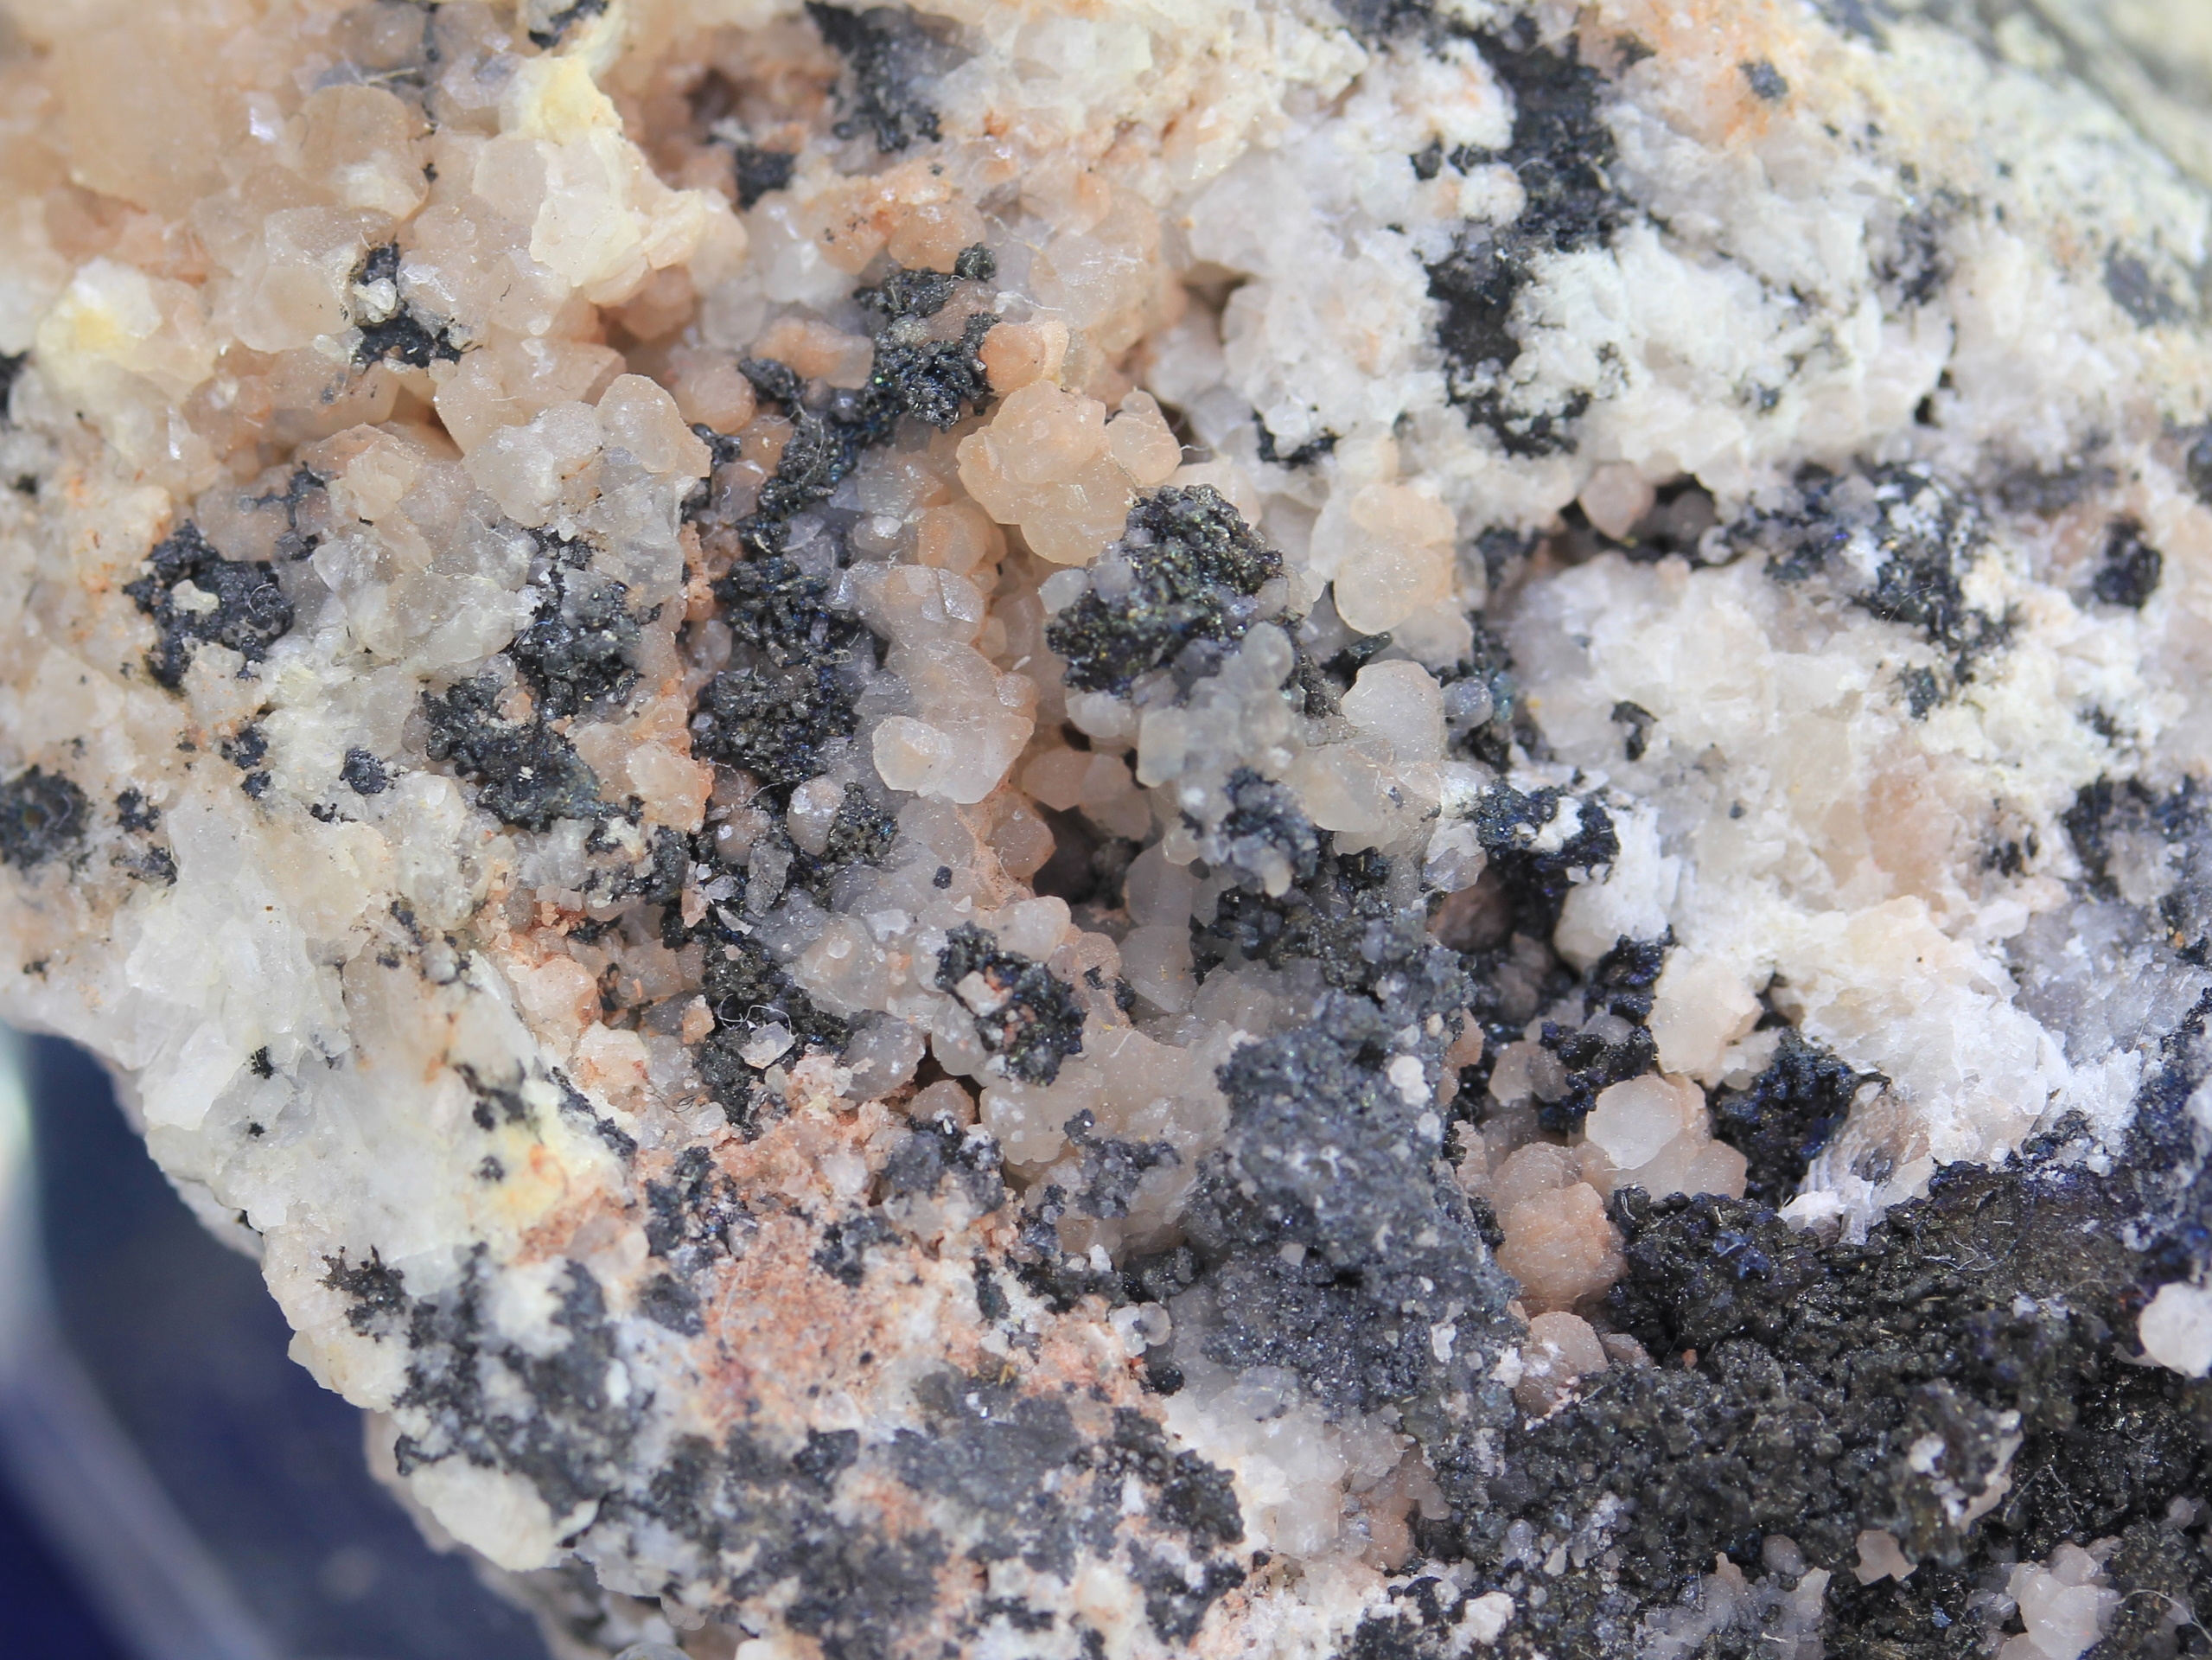 Polybasite on a calcite matrix